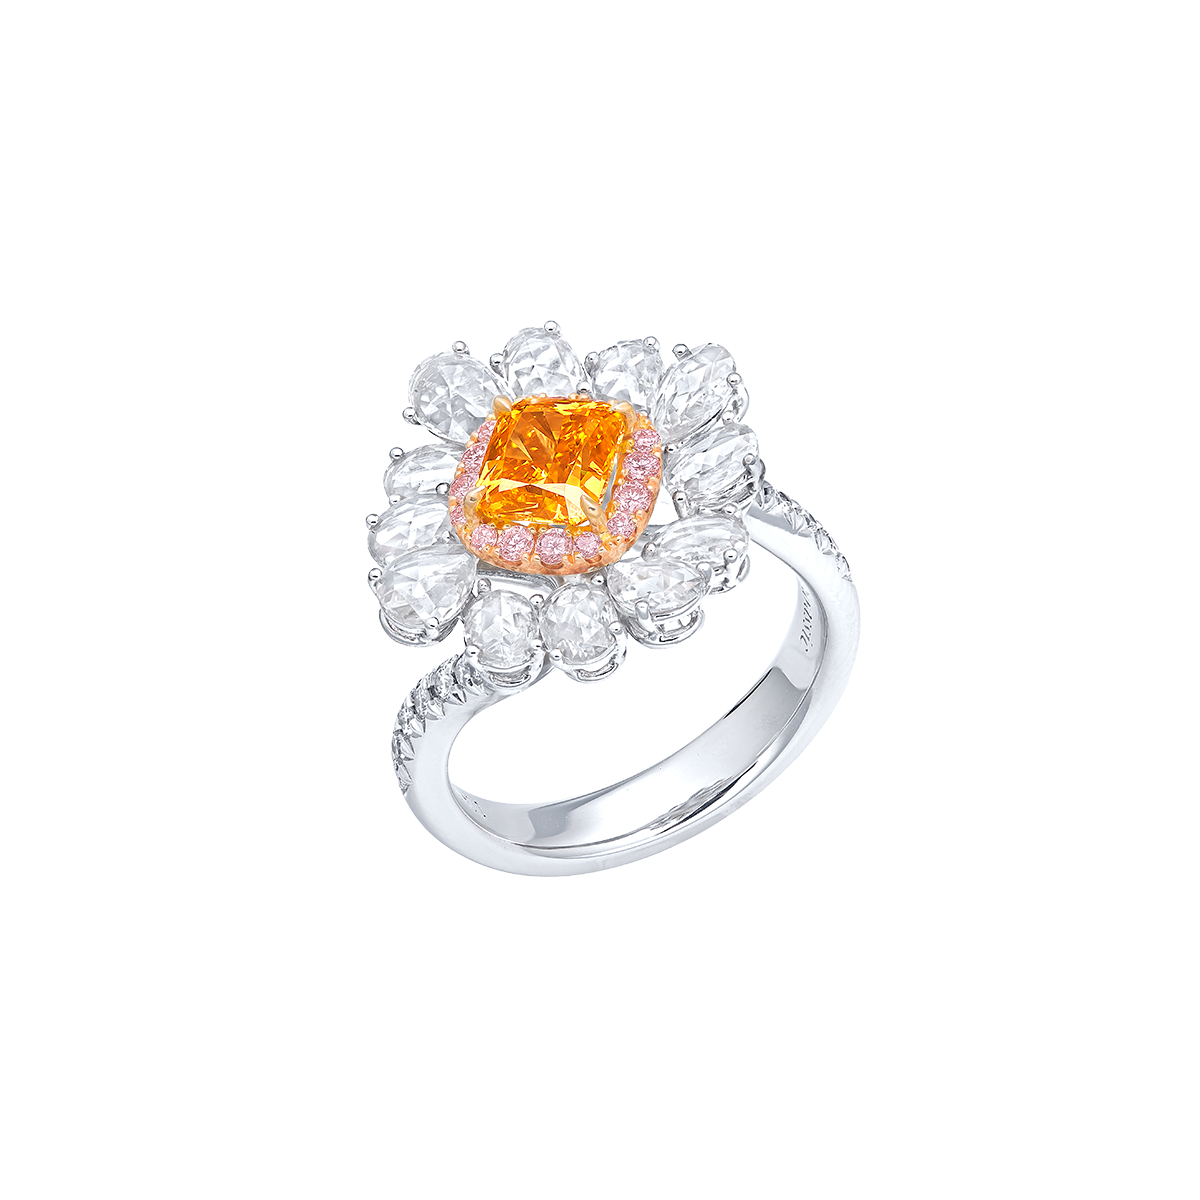 GIA 艷彩黃橘鑽鑽戒 1.13克拉
Fancy Vivid Yellow-Orange 
Colored Diamond and
Diamond Ring